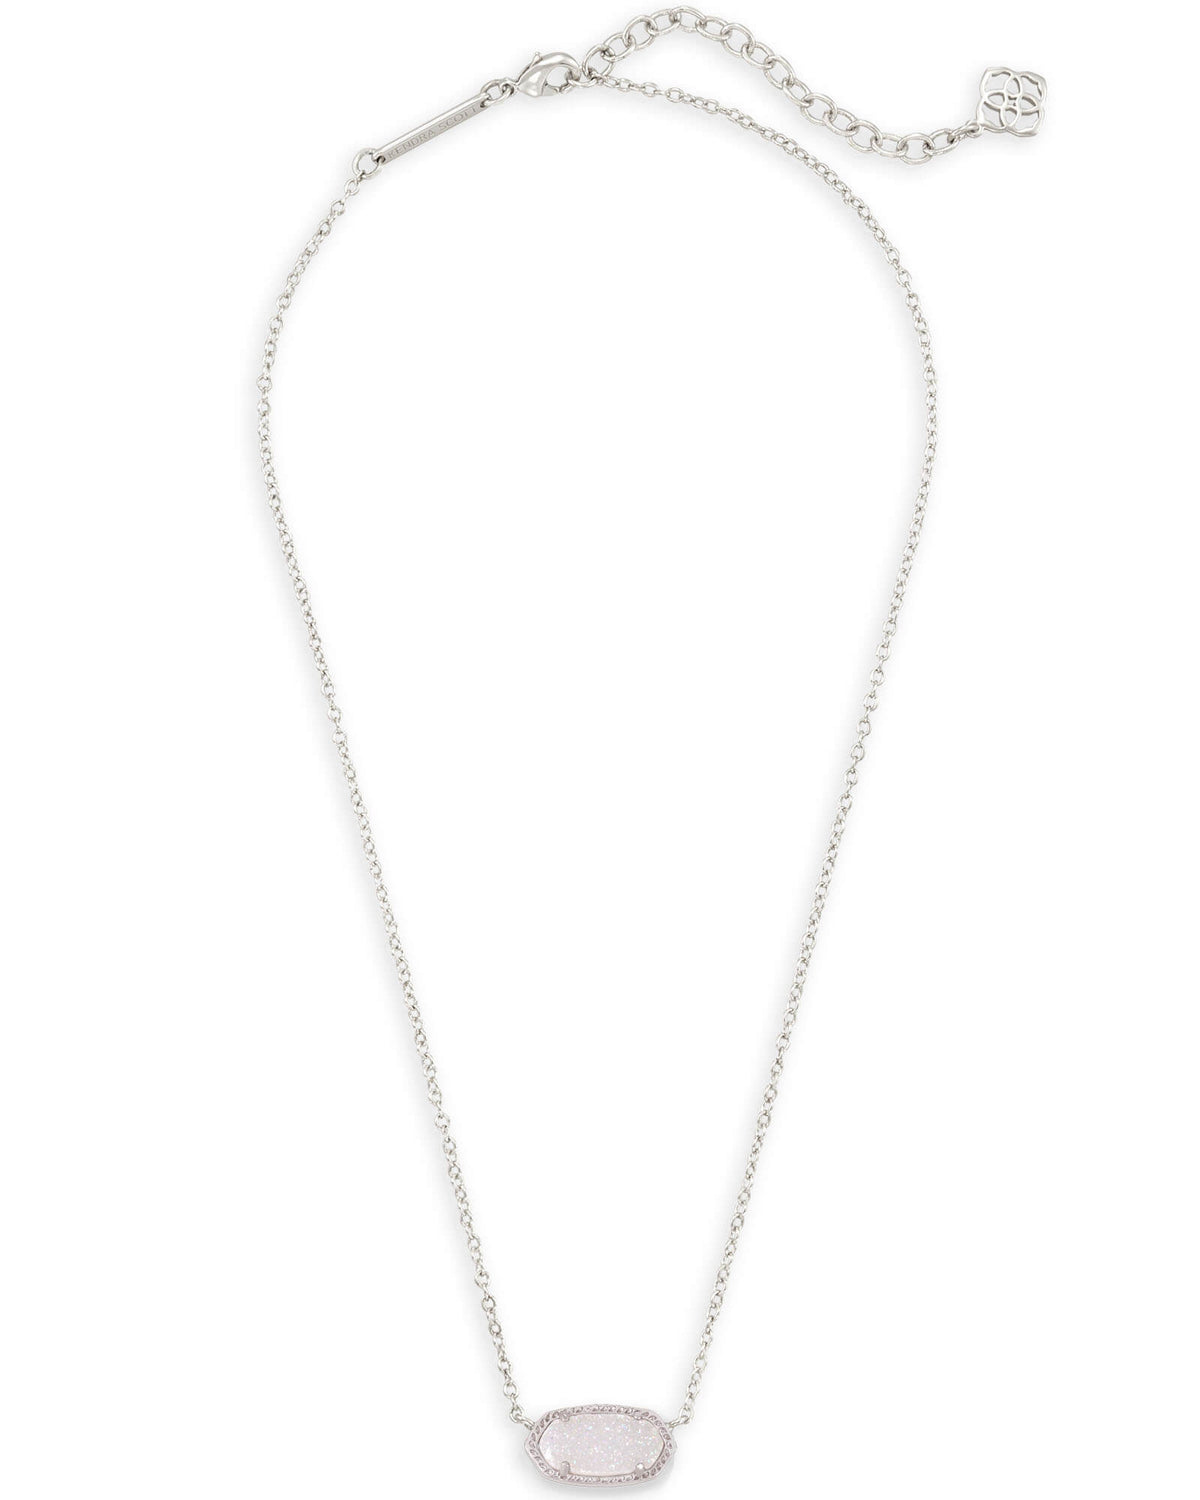 Kendra Scott Elisa Silver Pendant Necklace in Iridescent Drusy